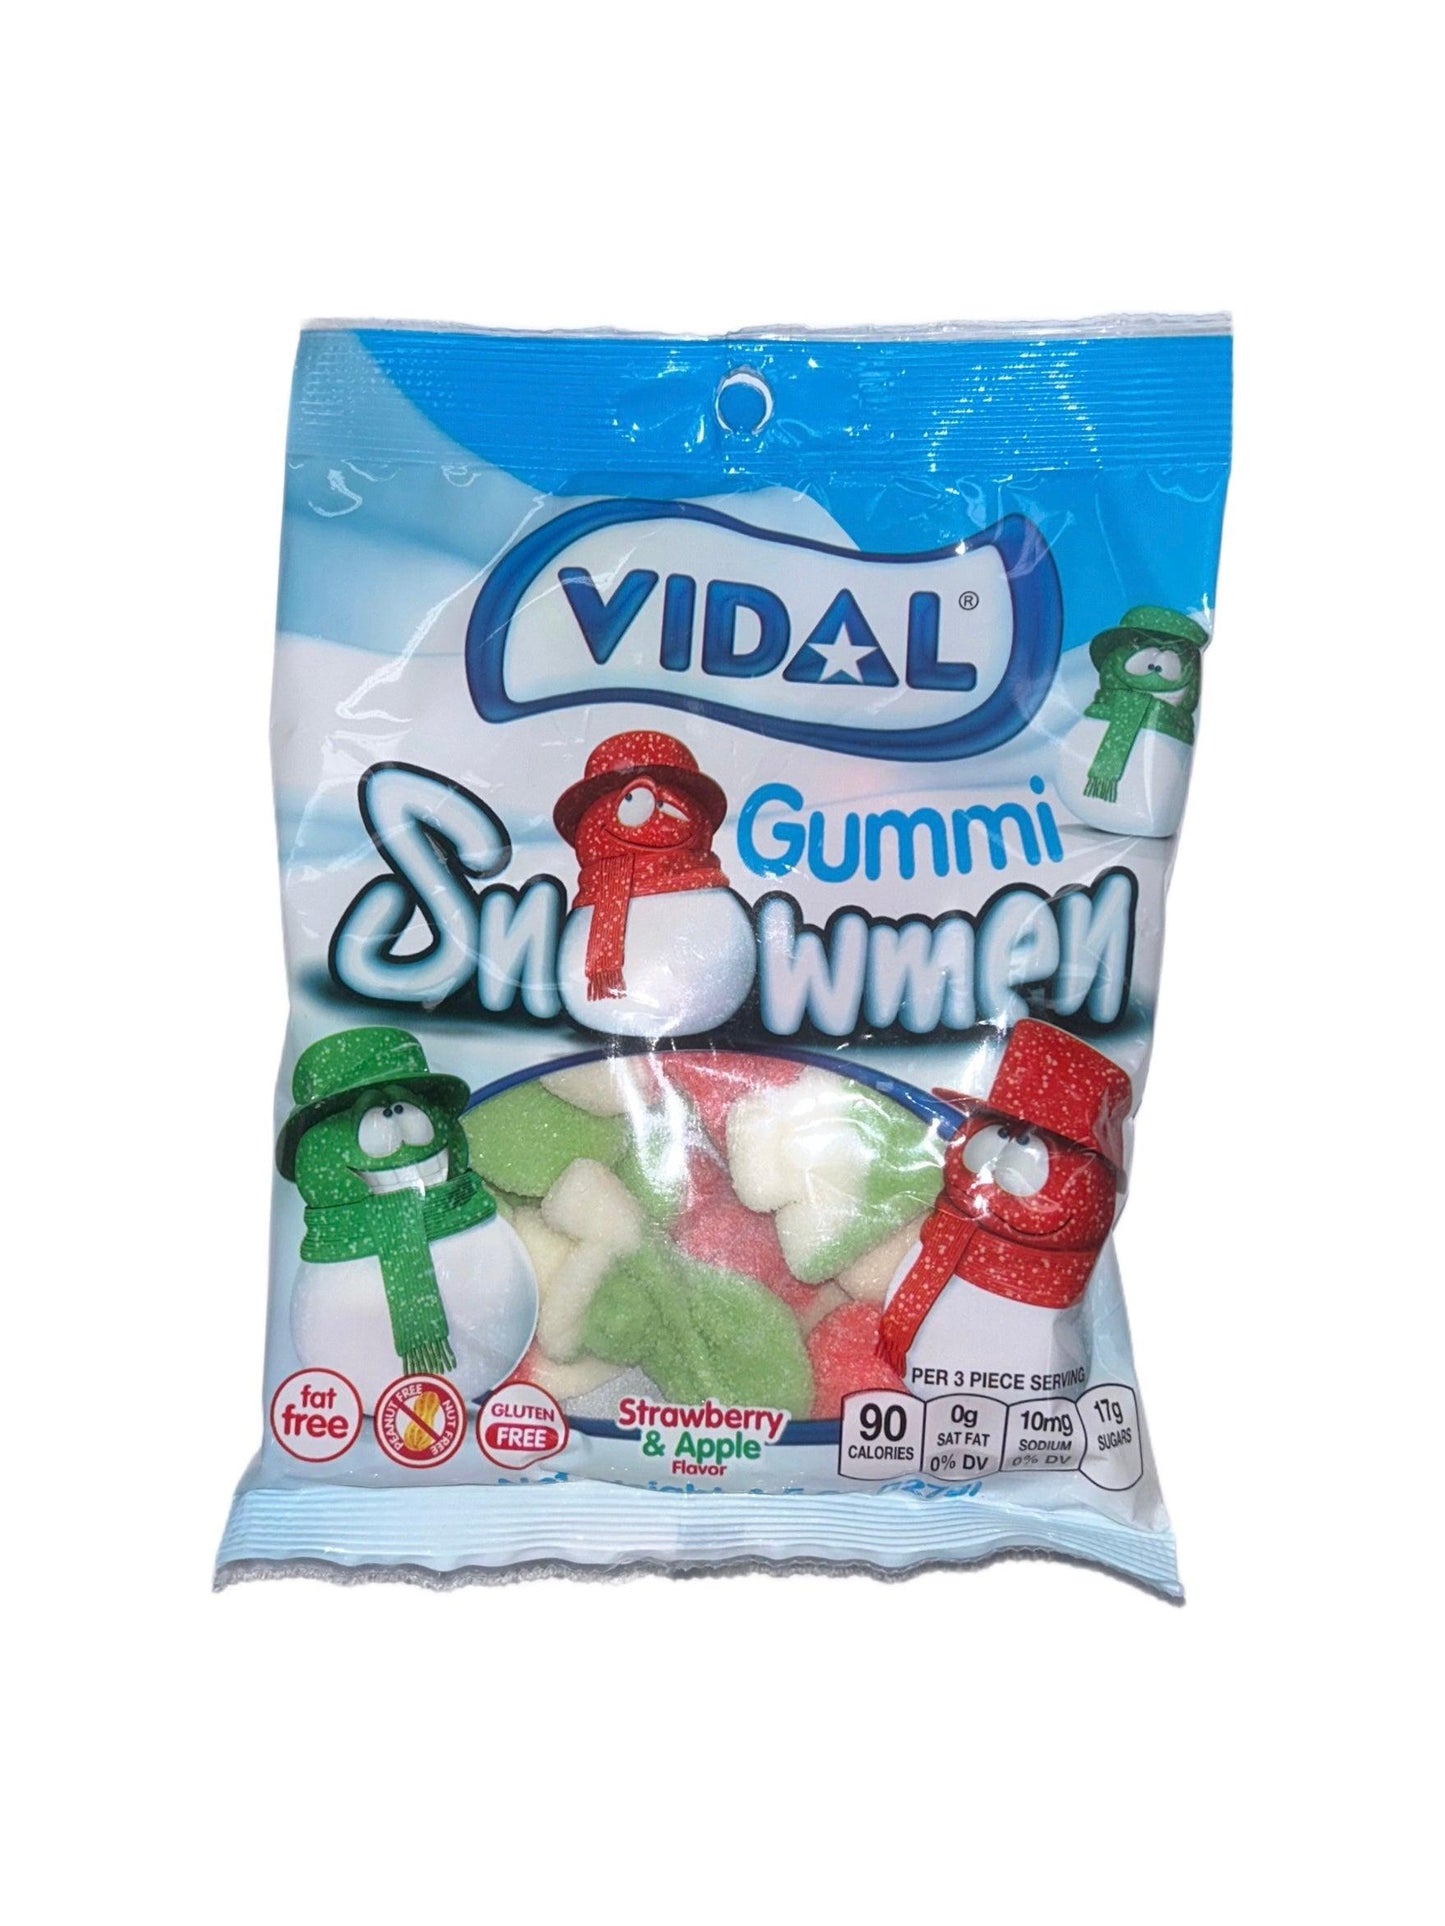 Vidal Gummi Snowmen Candy Bag 107G - Extreme Snacks